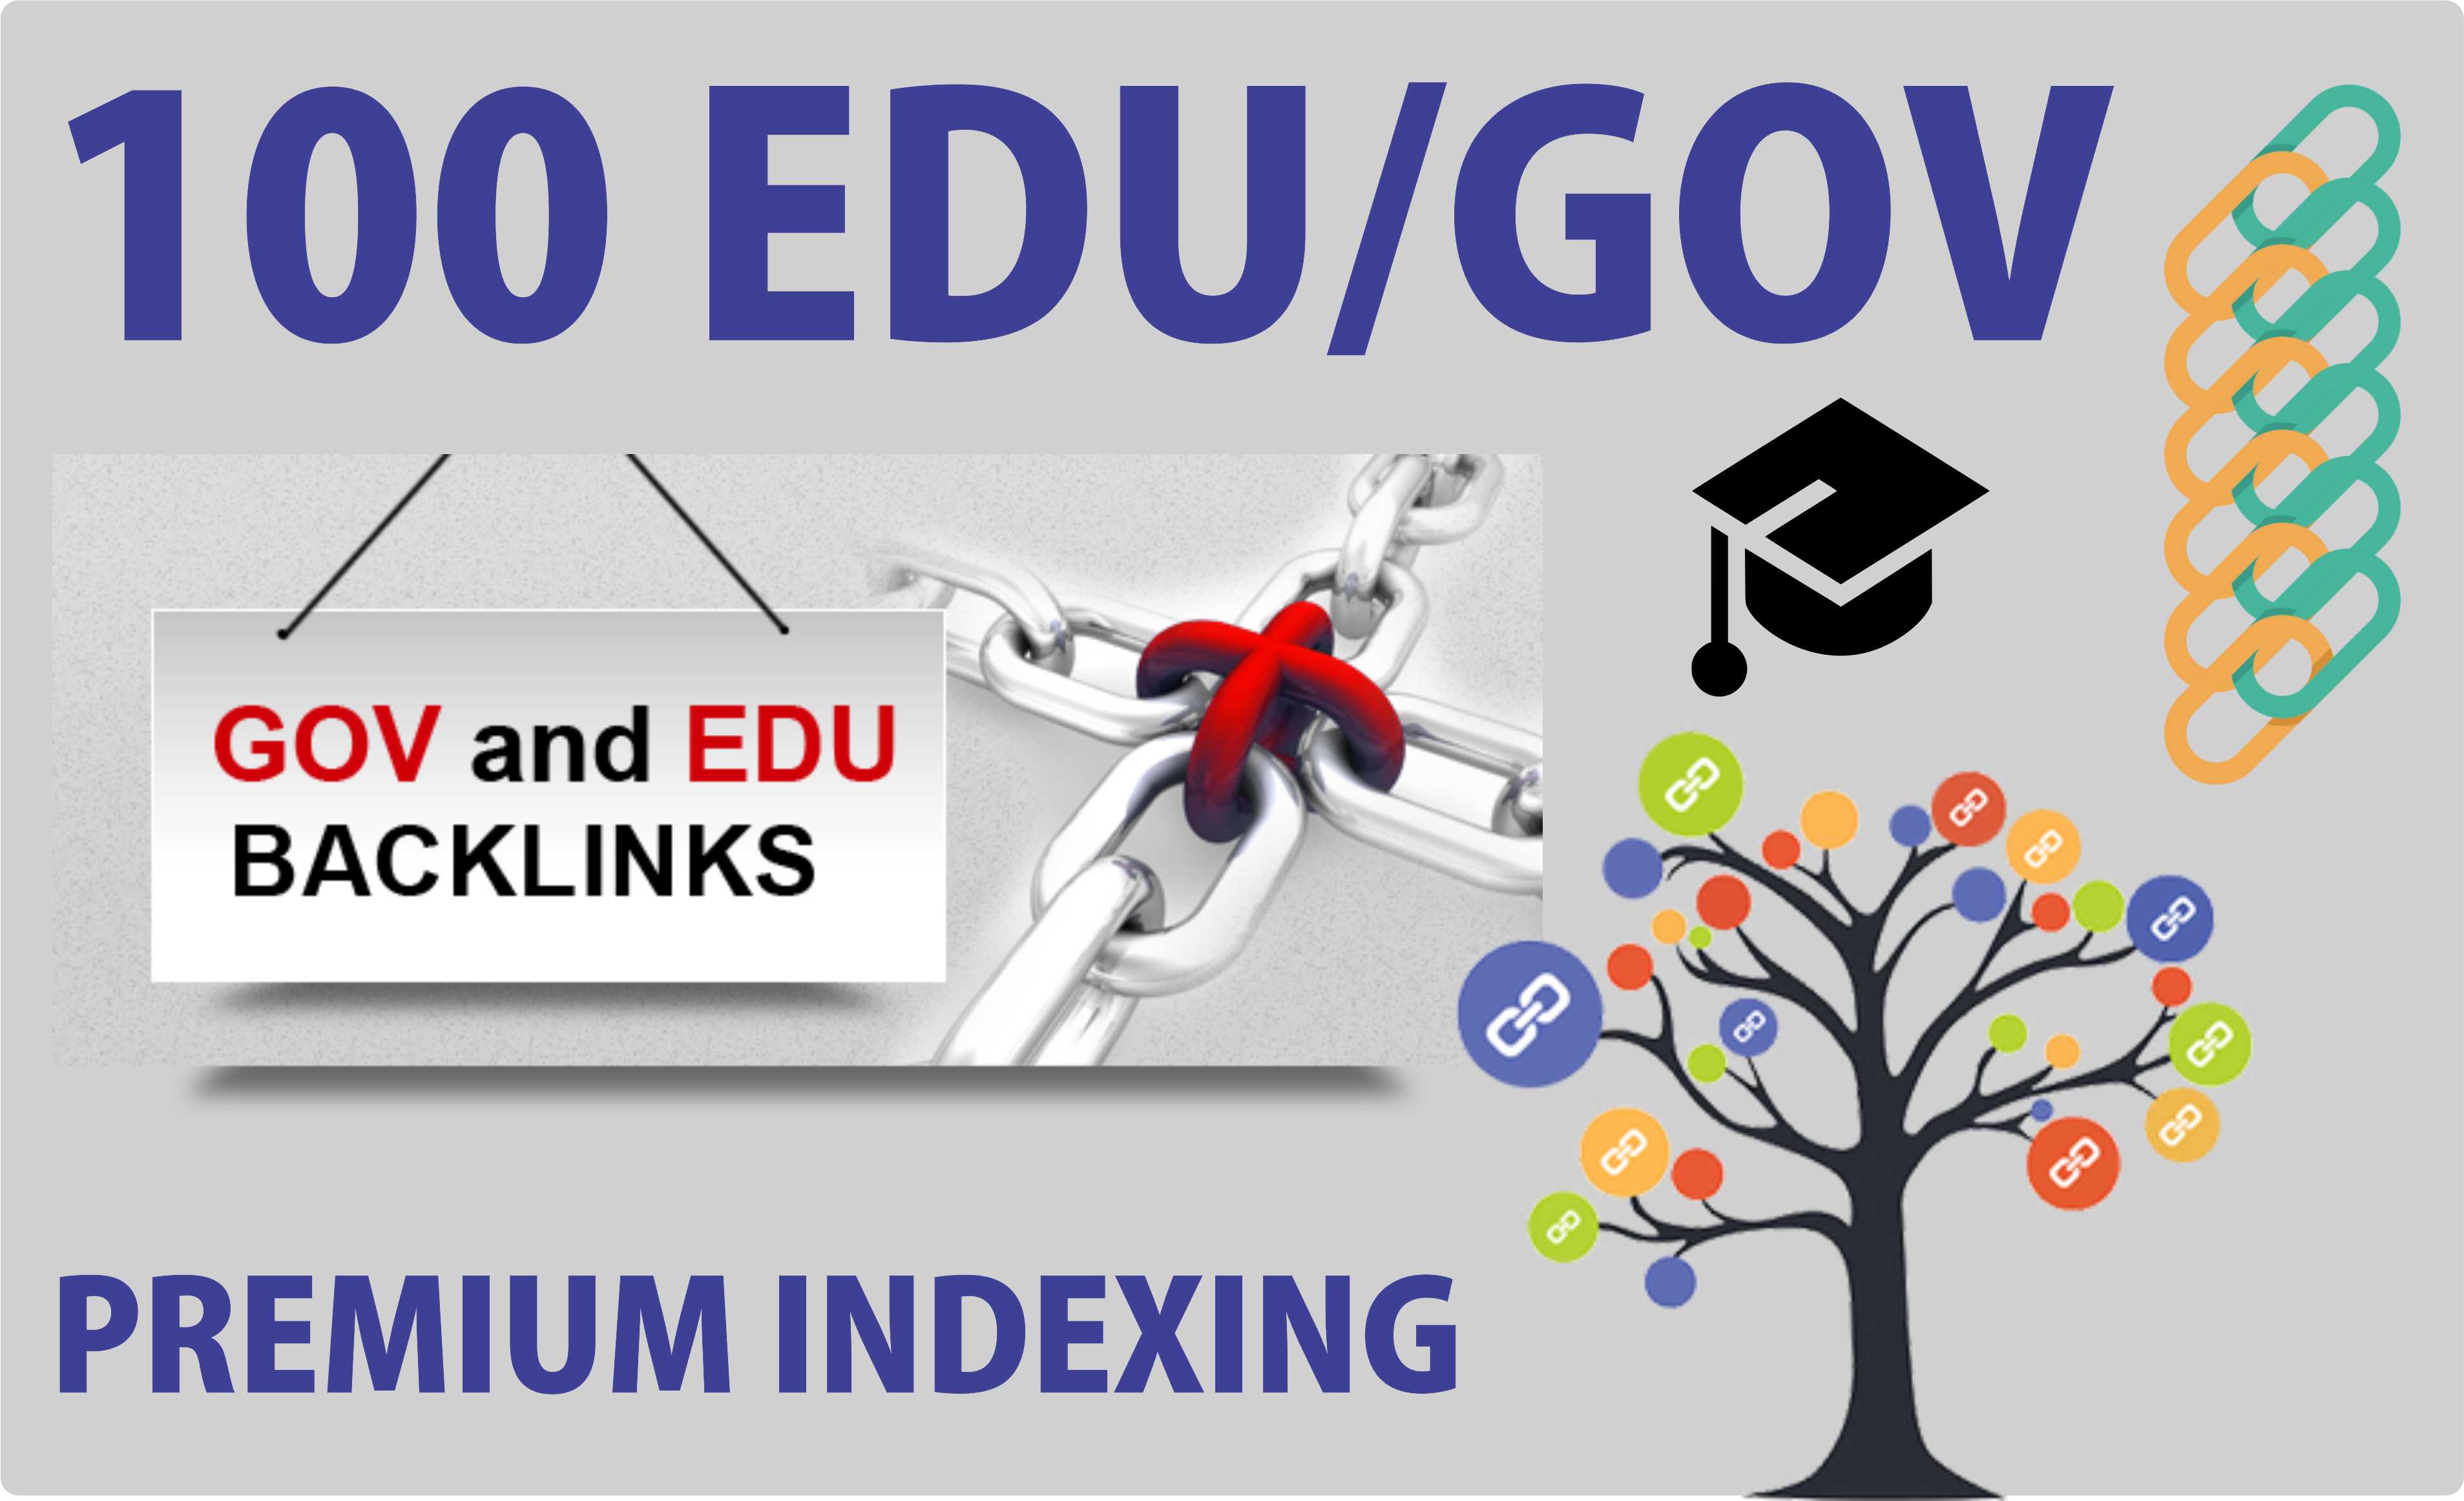 Provide you 100 EDU/GOV permanent Backlinks